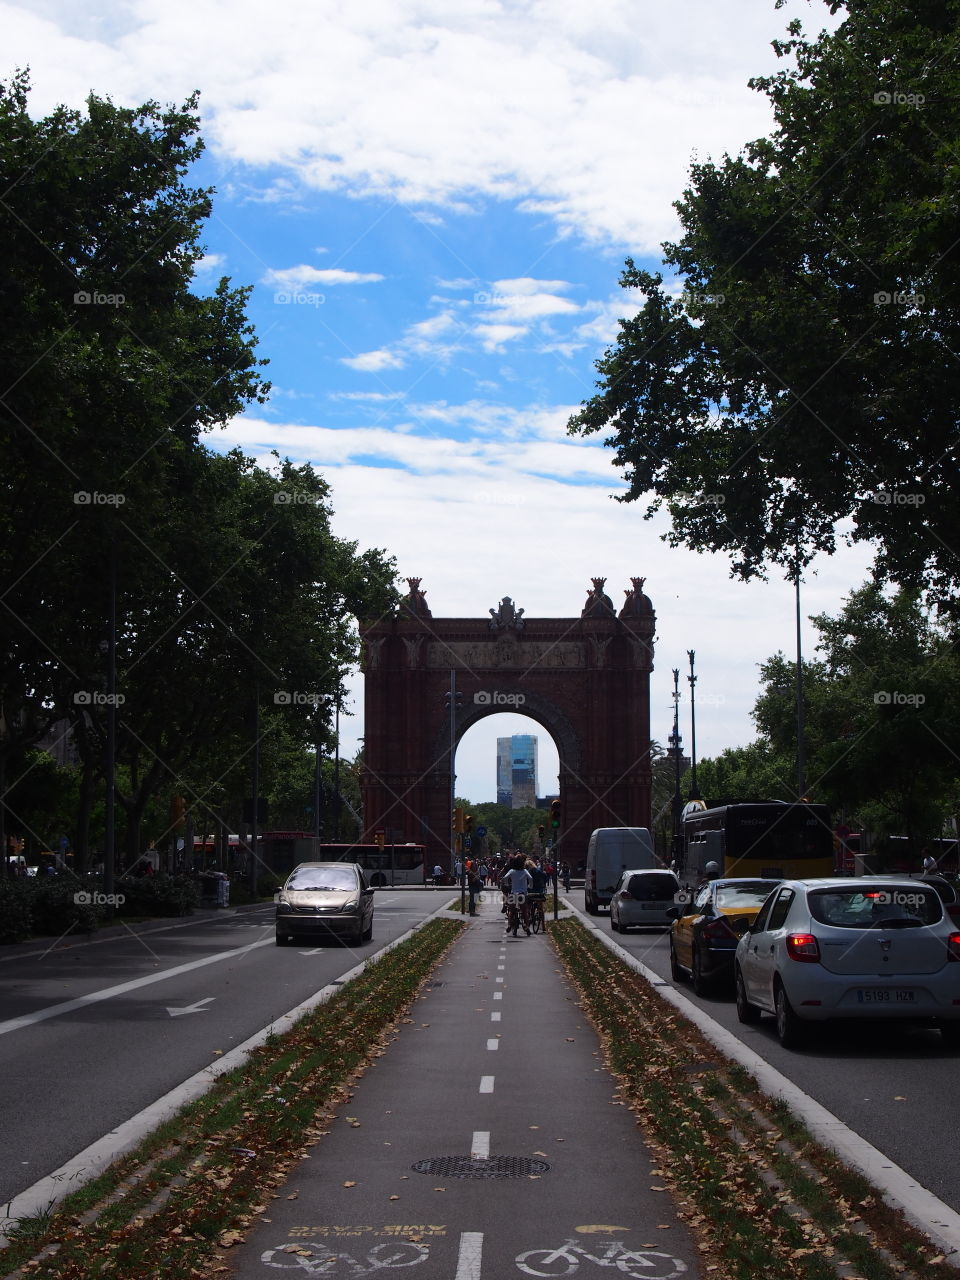 Triumphal arch in barcelona